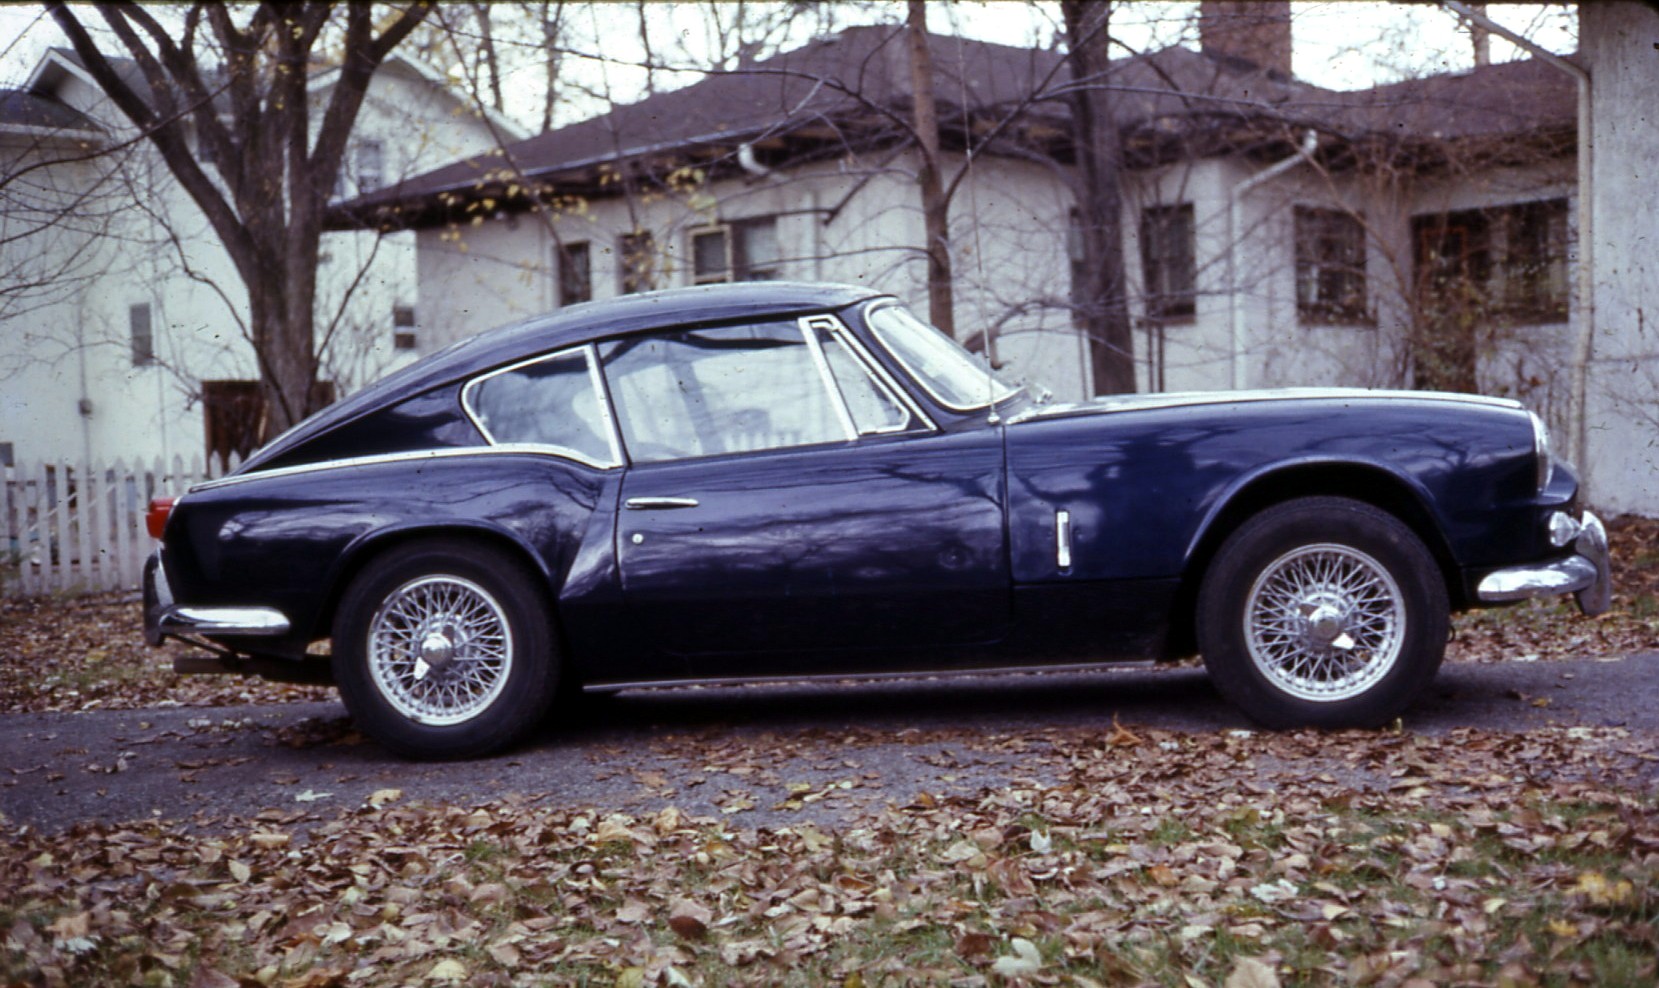 19691100 03 Triumph | Flickr - Photo Sharing!